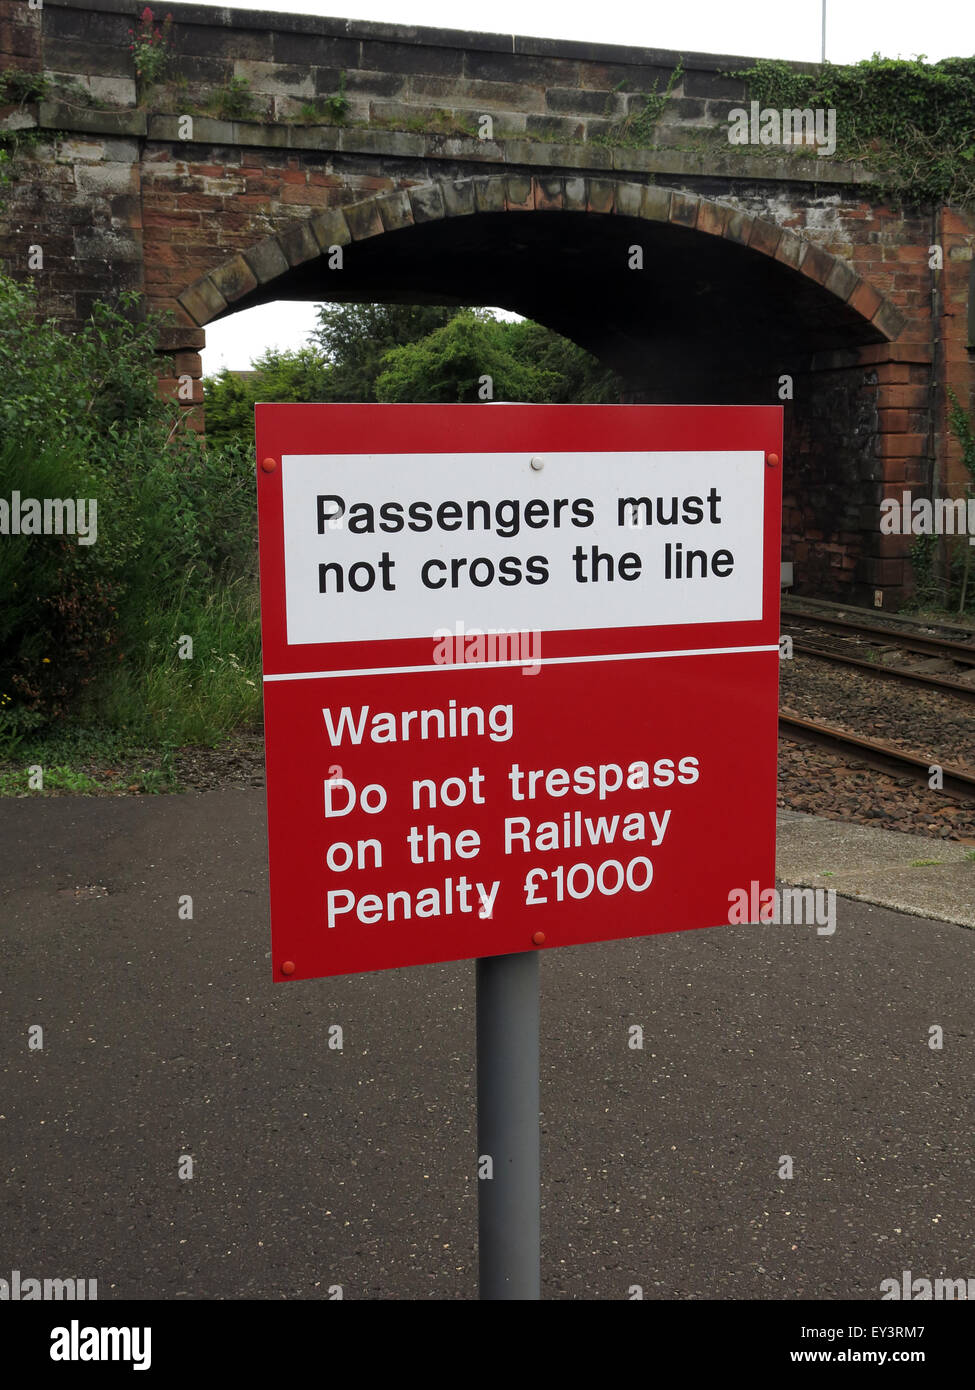 Passengers must not cross the line sign on railway platform, Station road, Annan, Dumfries, Scotland, UK Stock Photo